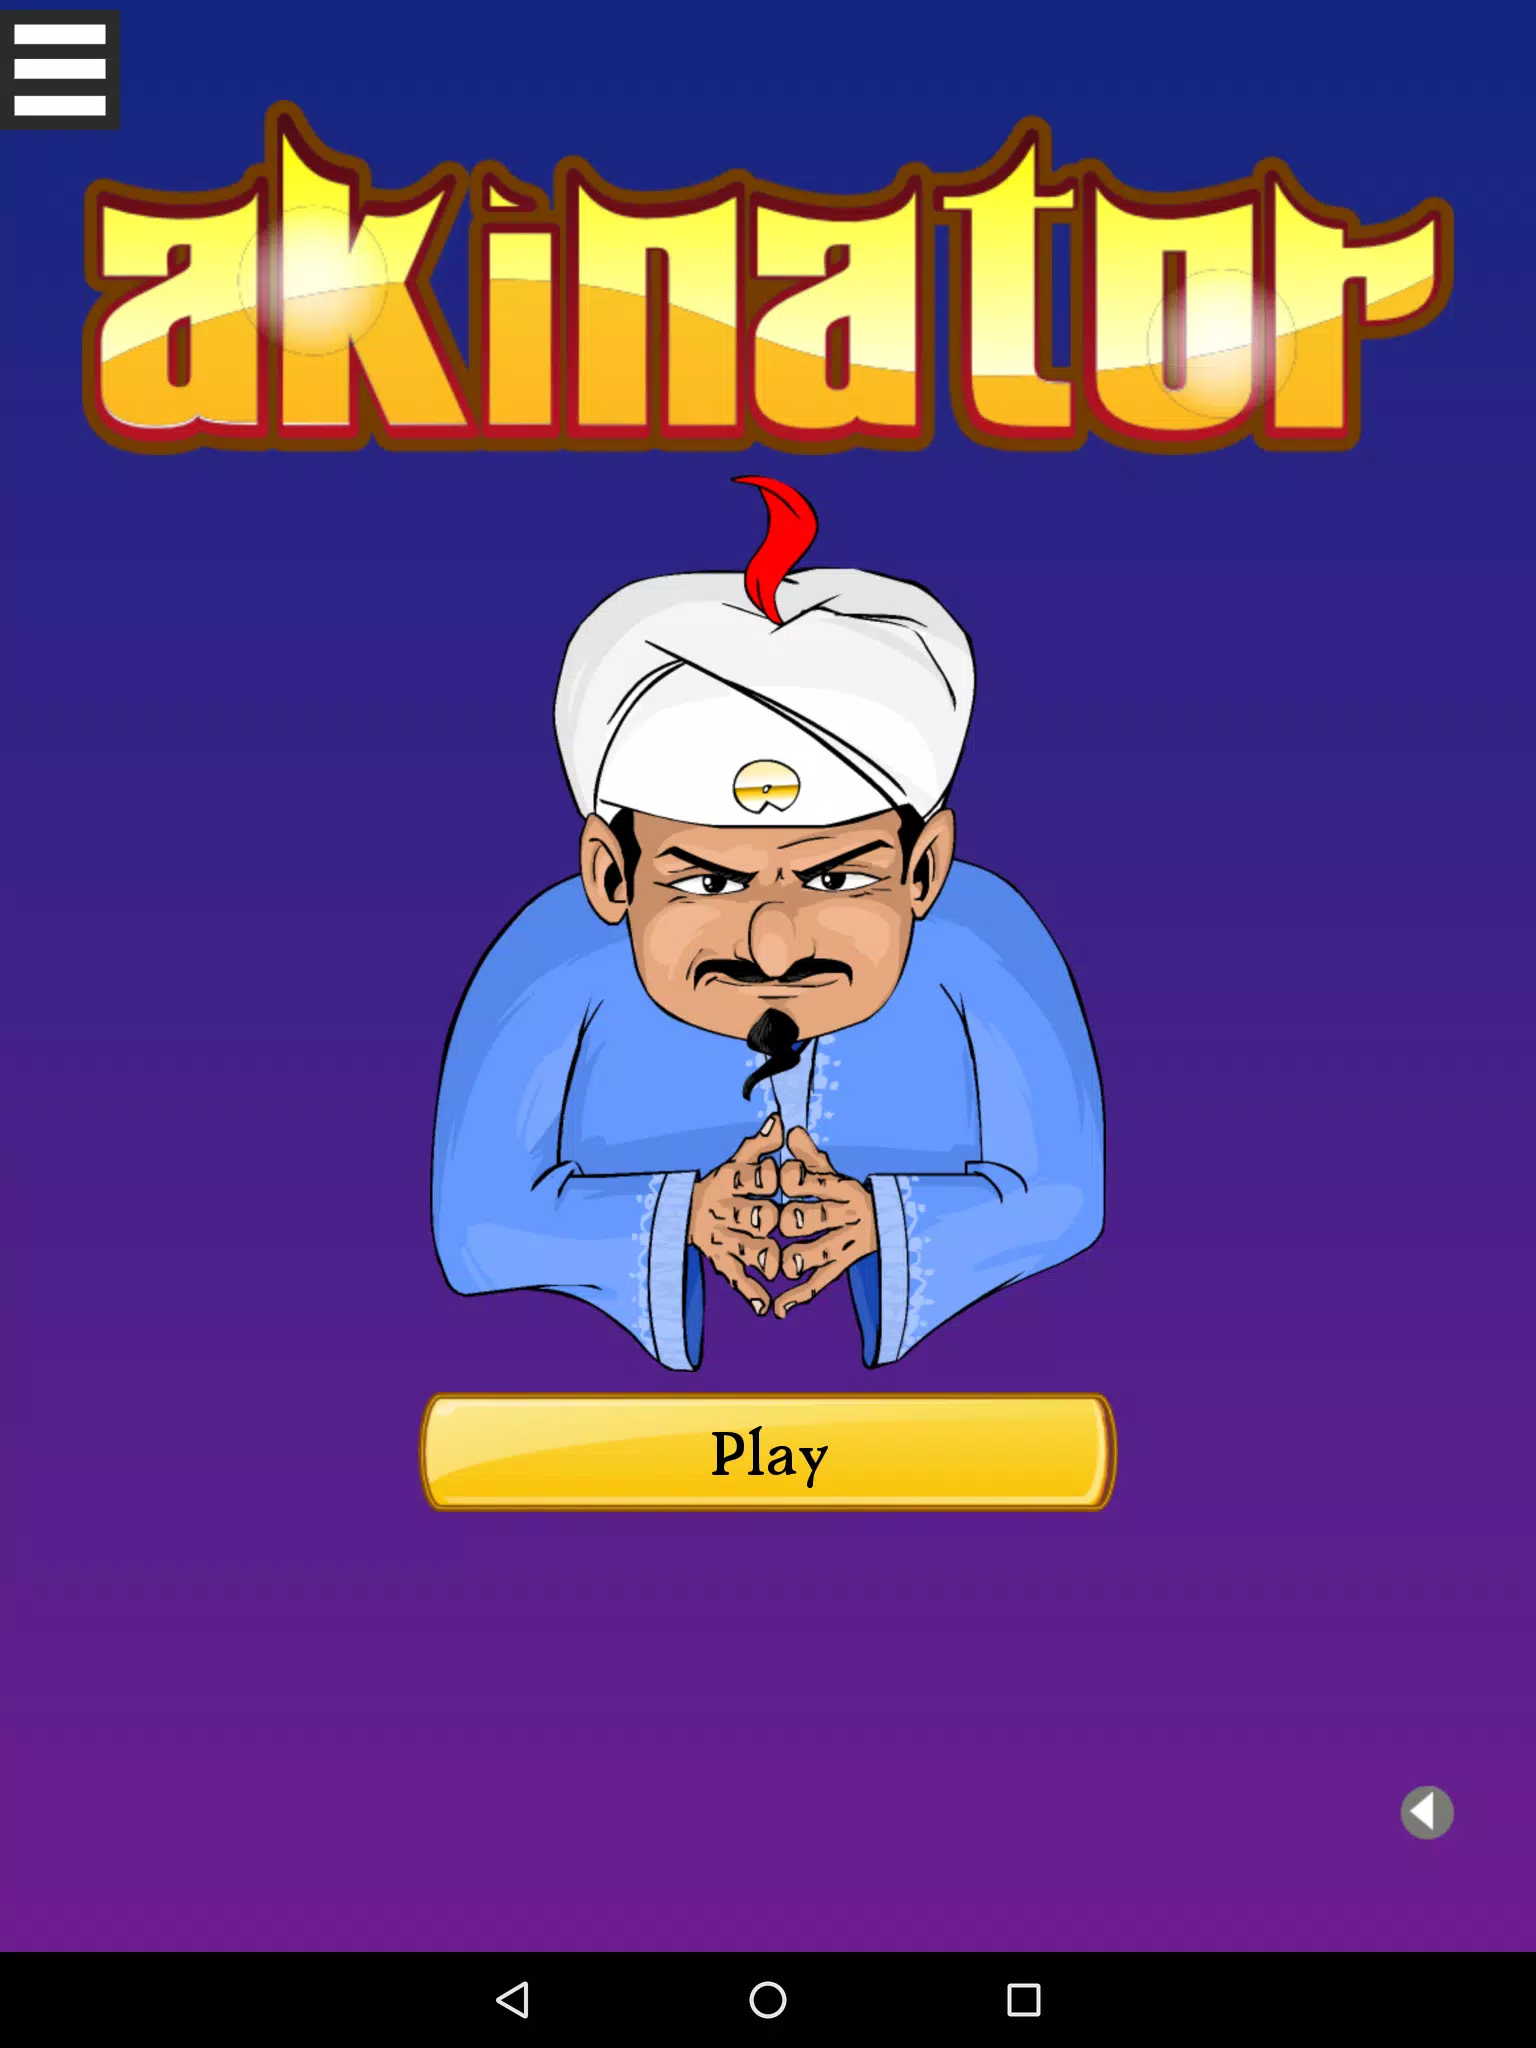 Download Akinator